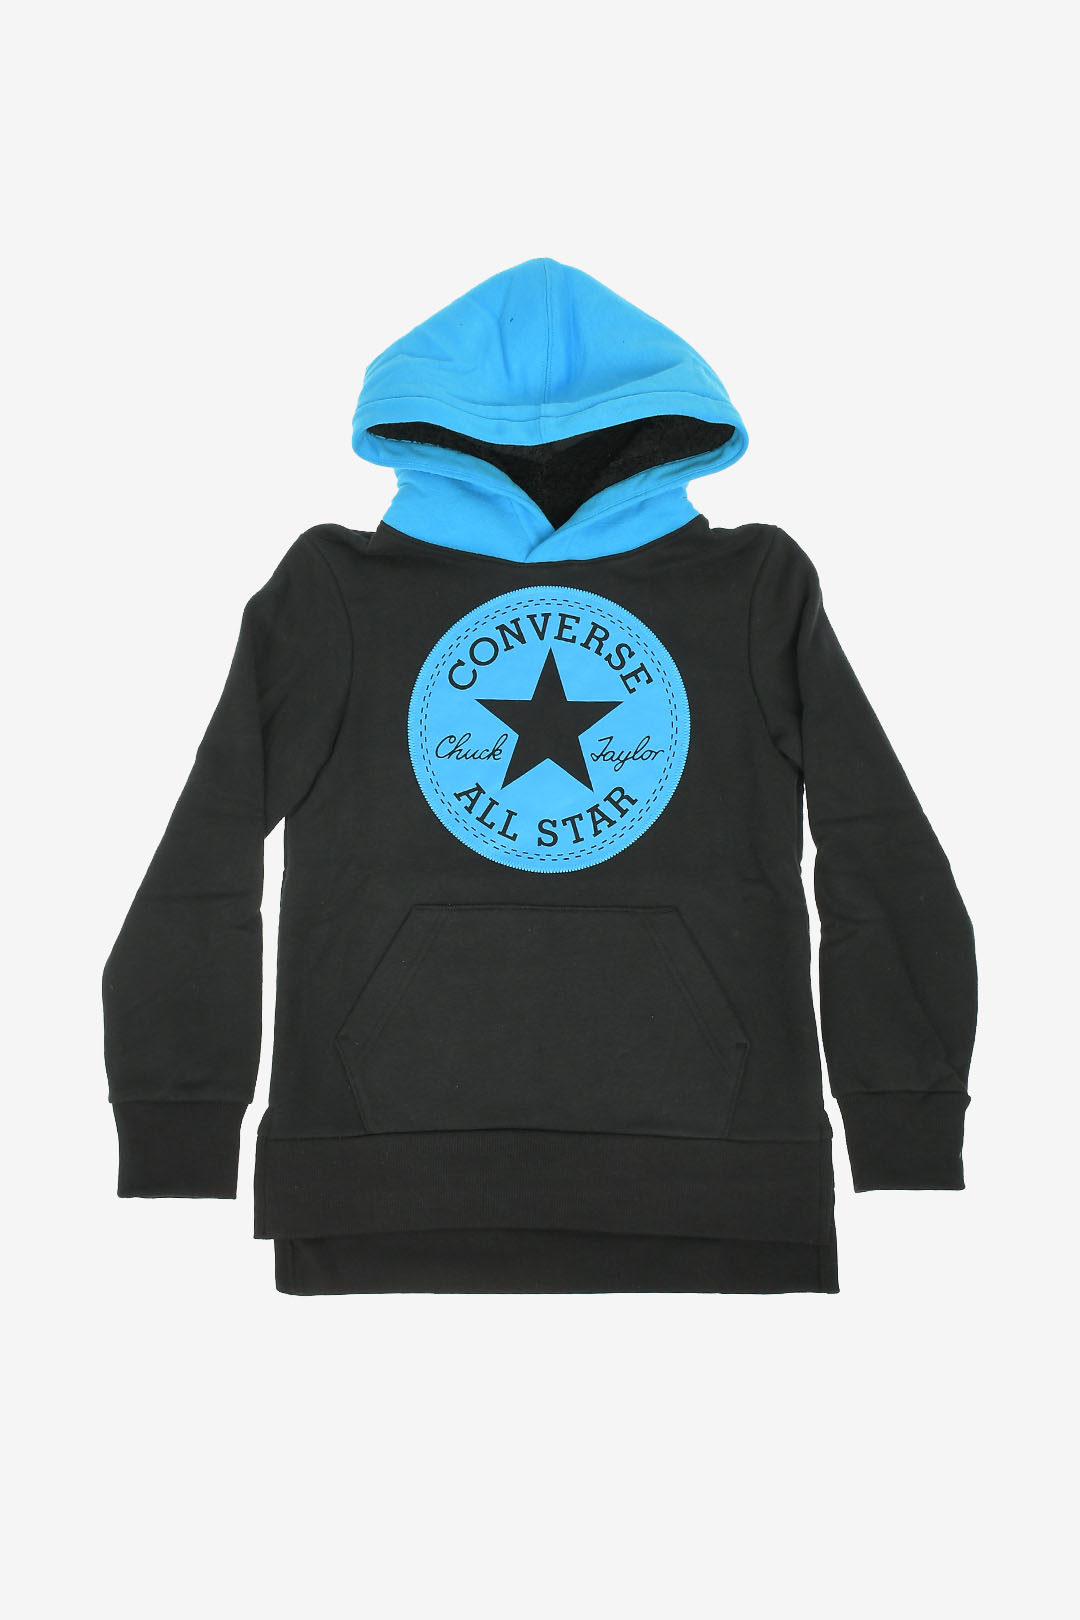 Converse KIDS ALL STAR Glamood - Hooded boys Sweatshirt Outlet